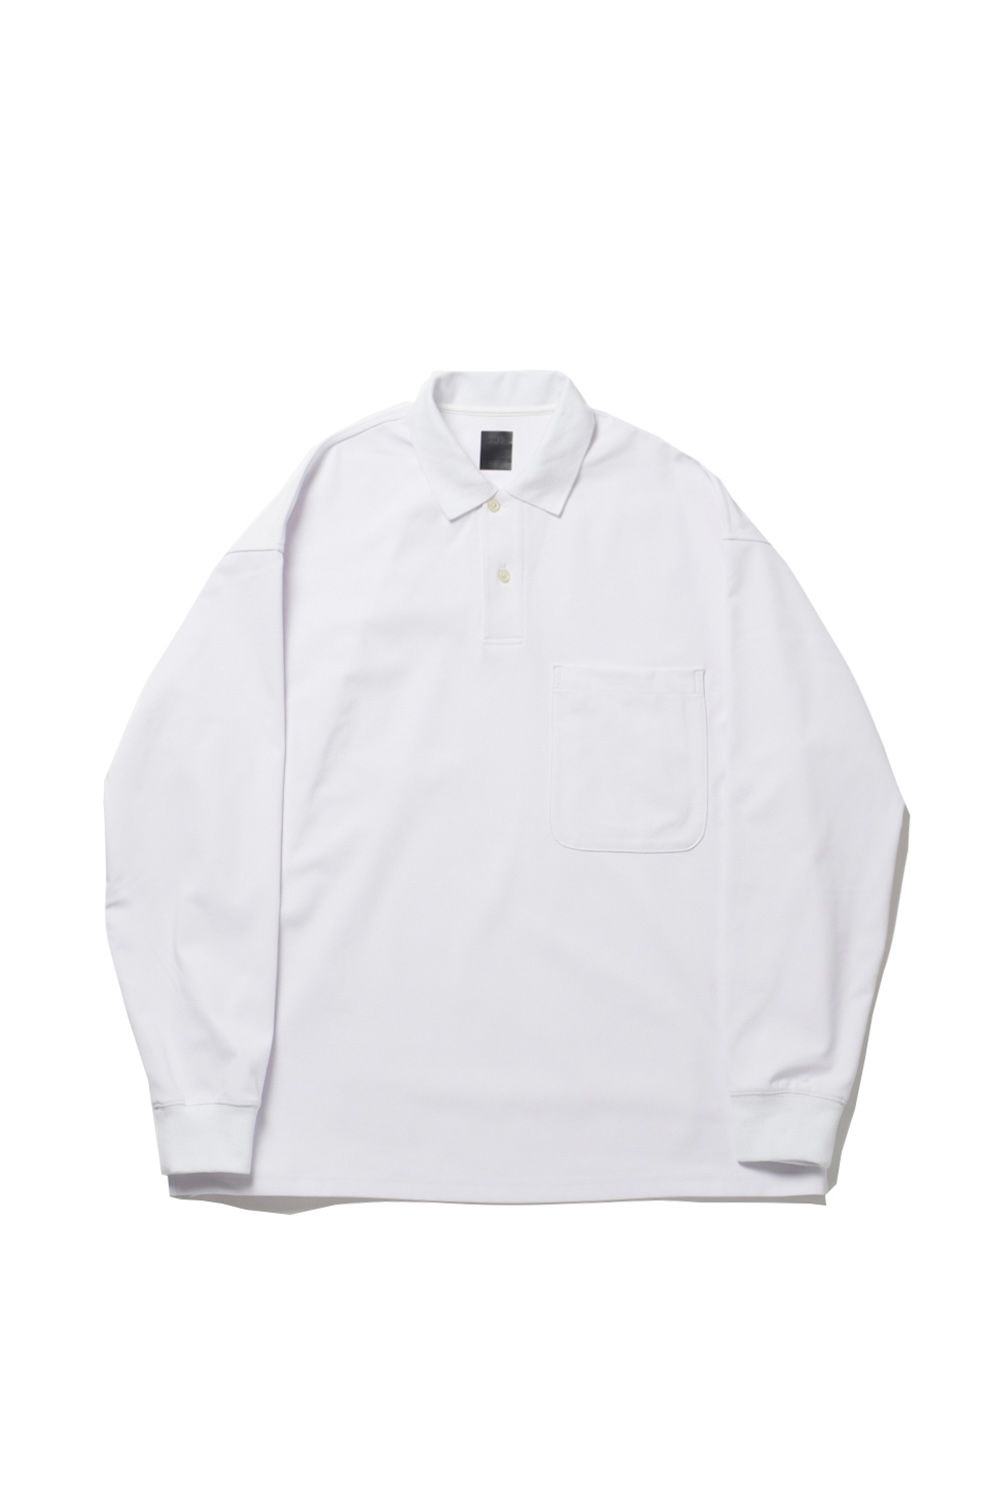 daiwa pier39 tech polo s/s XL ブラック ポロシャツ